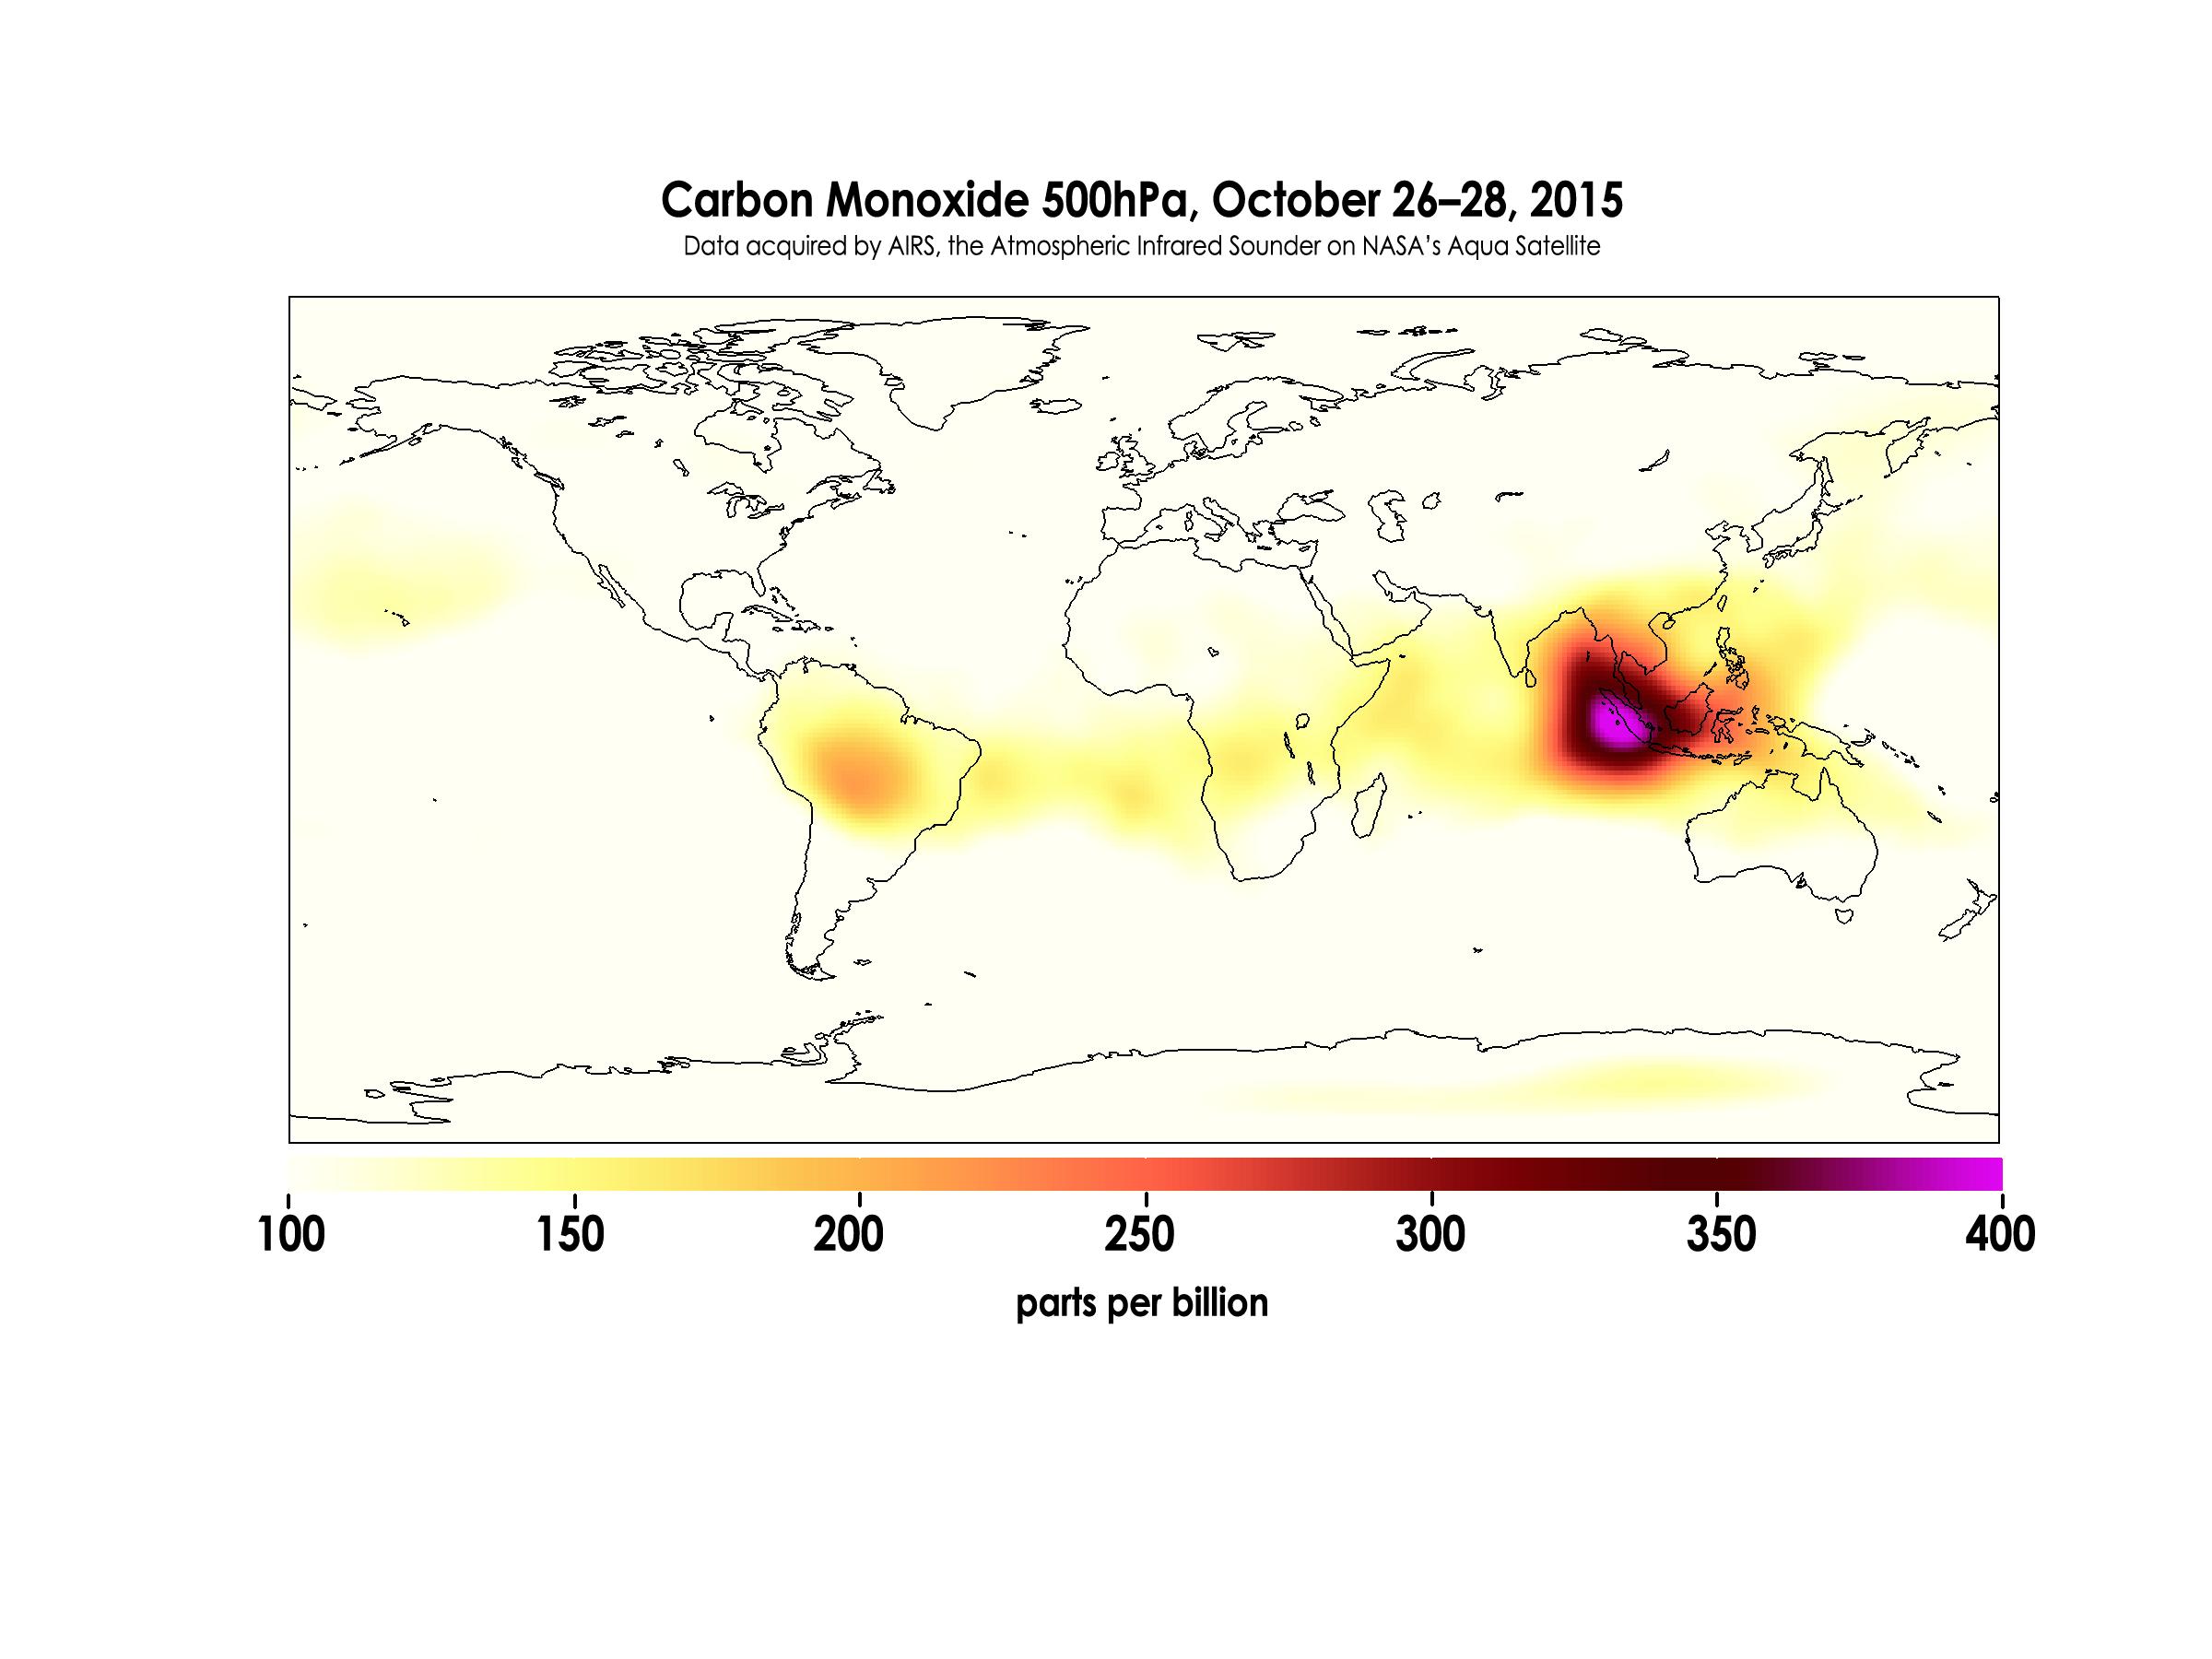 Carbon Monoxide in Mid-Troposphere over Indonesia Fires, October 26-28, 2015